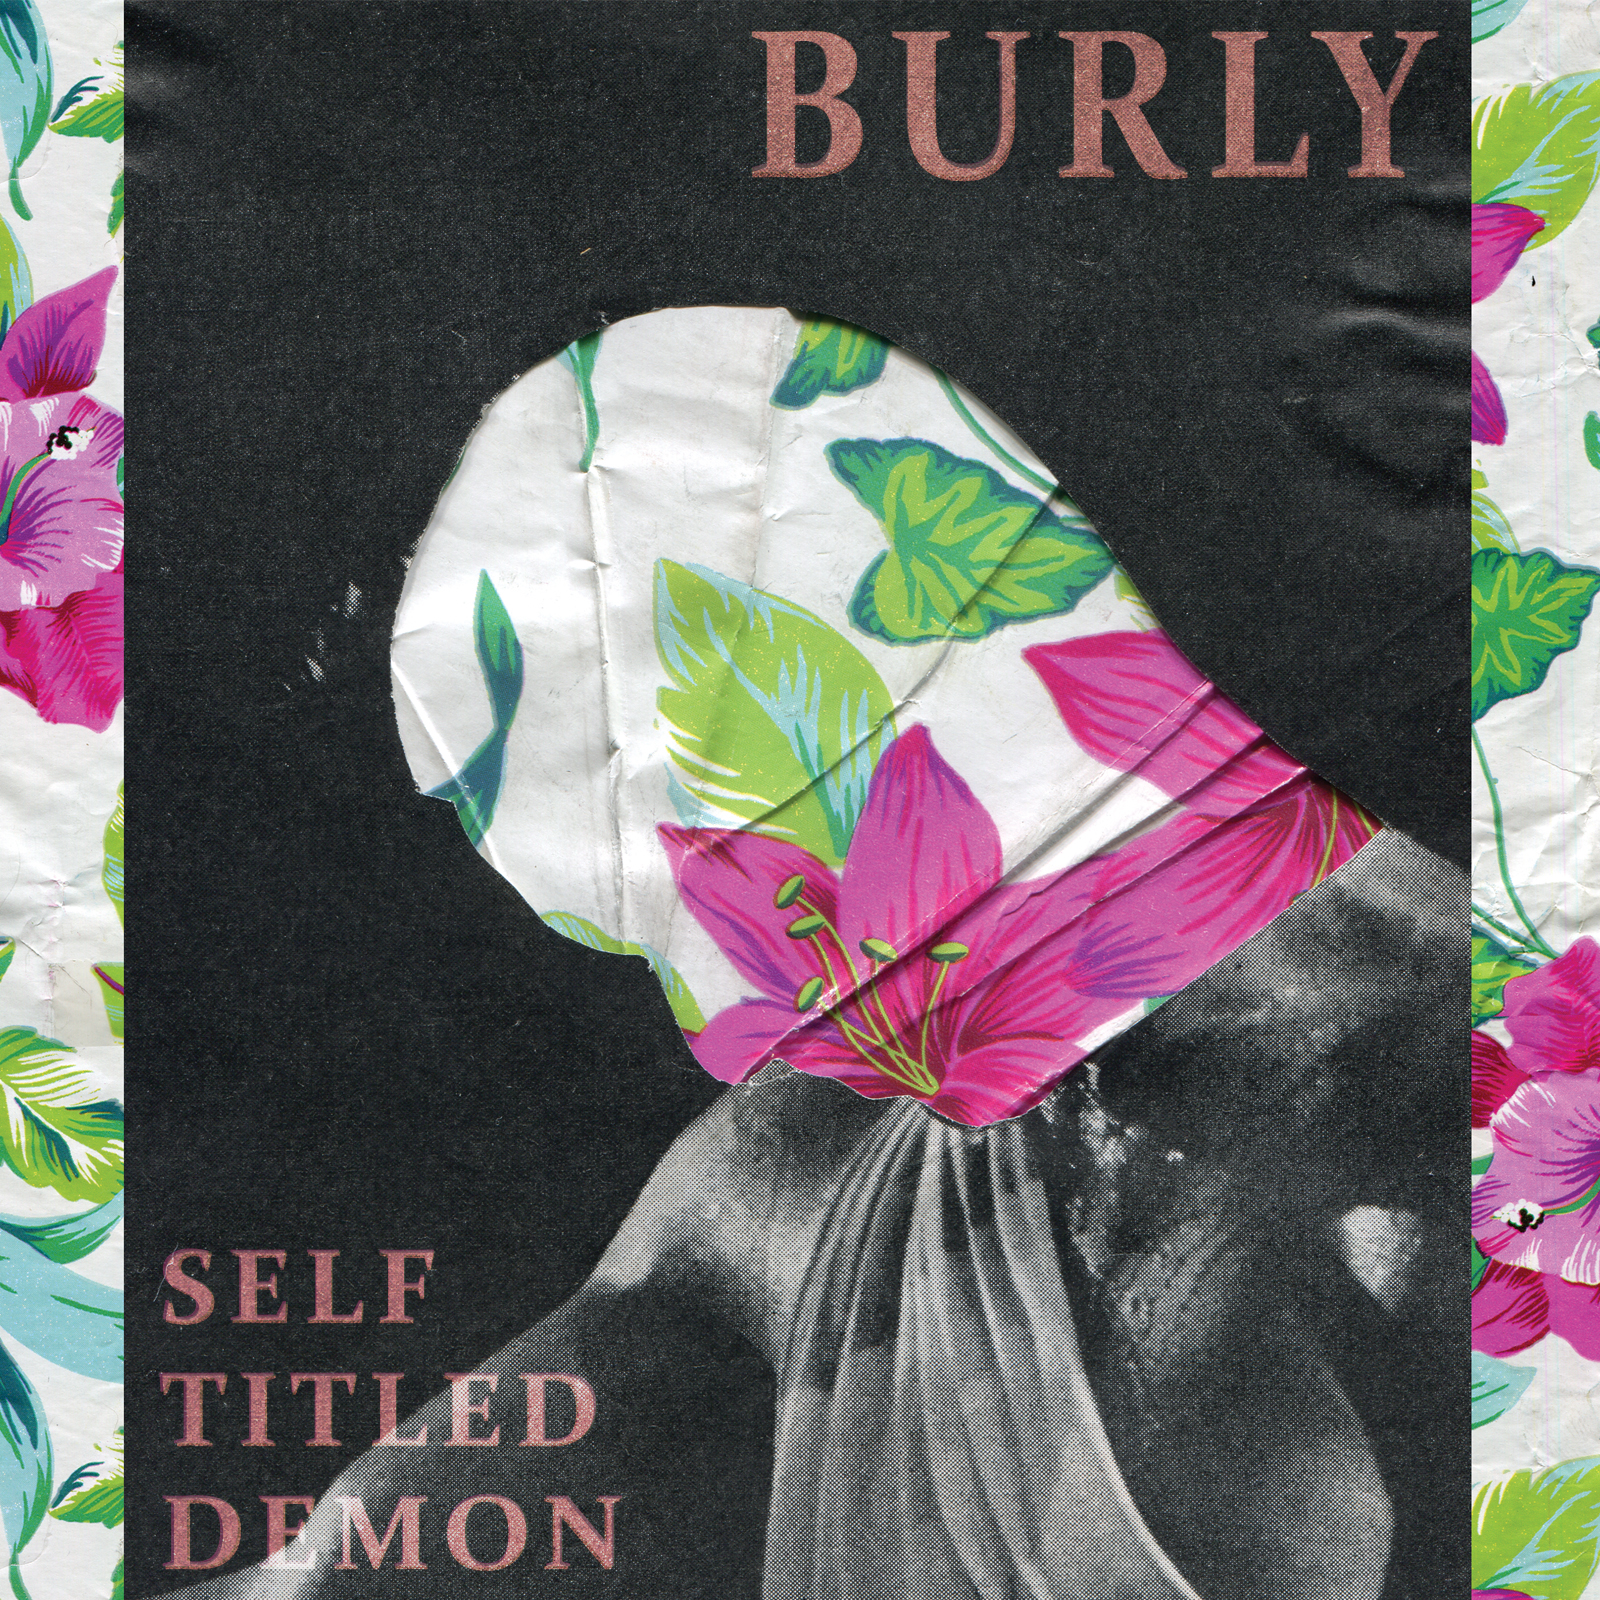 Burly self titled demon art